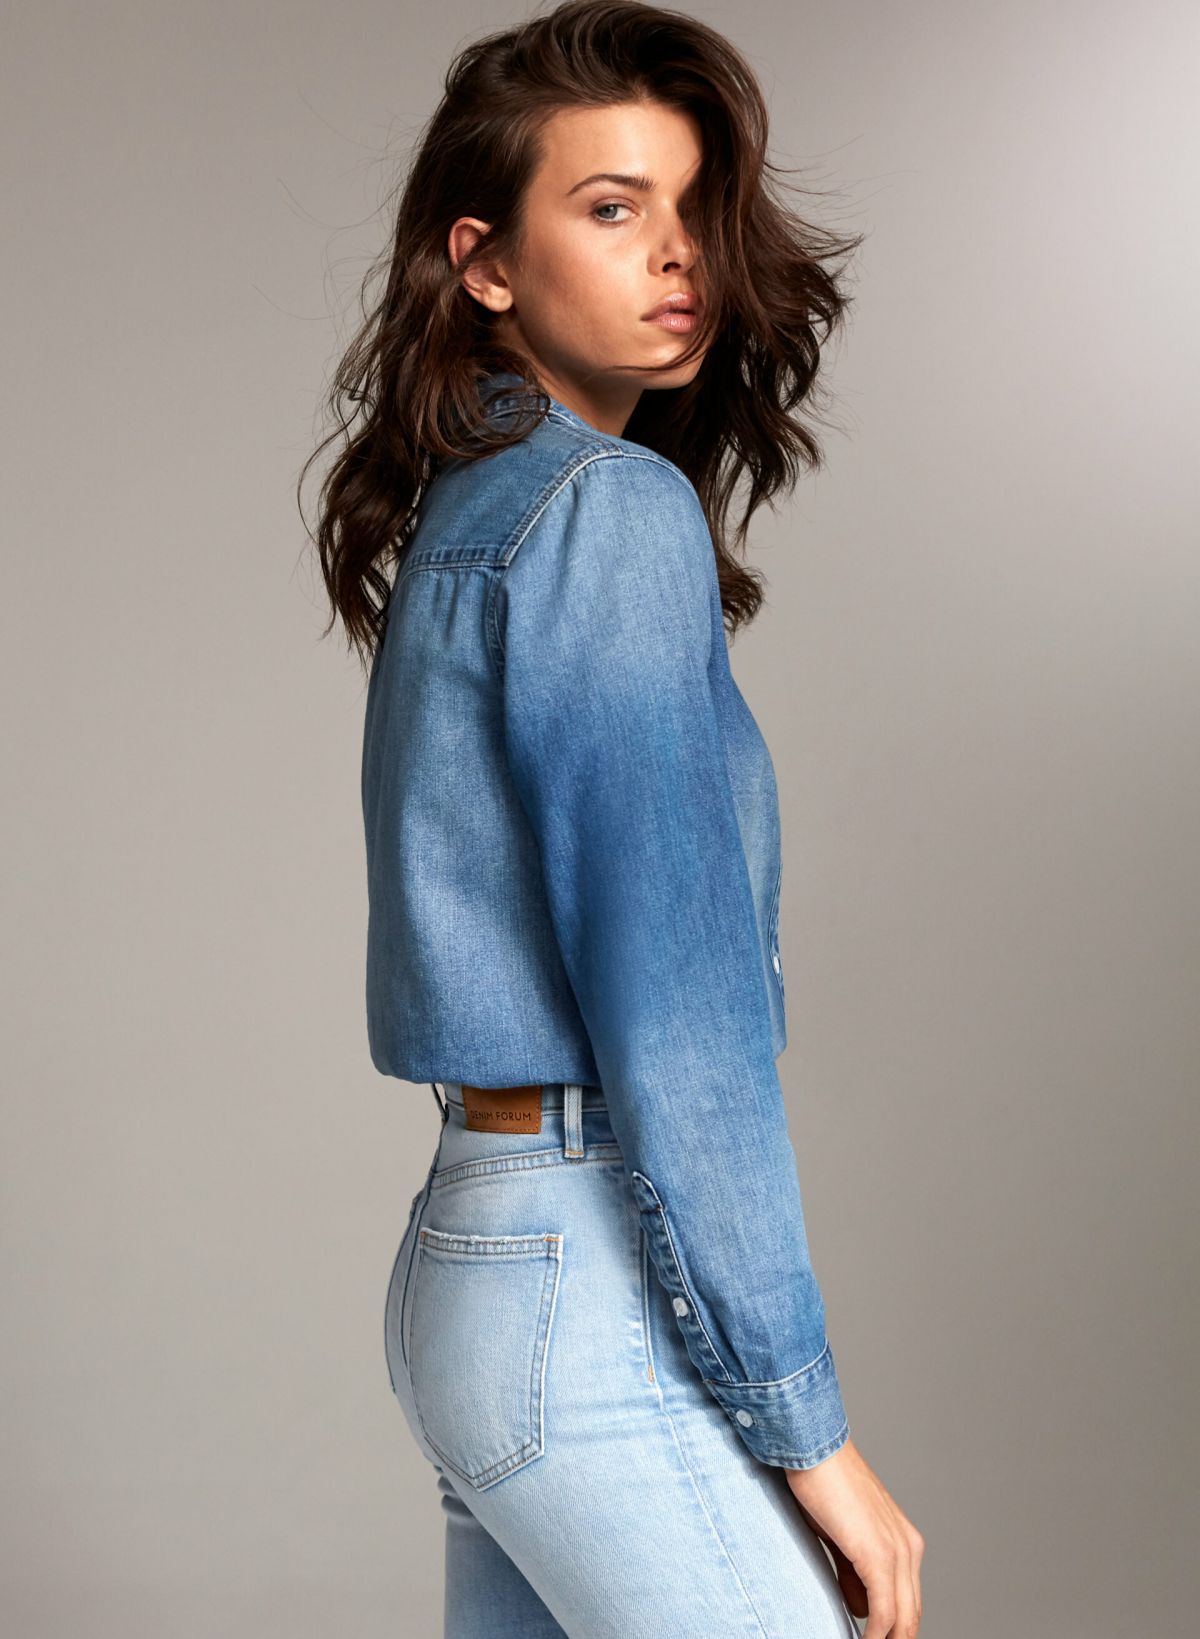 GEORGIA FOWLER for Aritzia Jeans, March 2019 – HawtCelebs